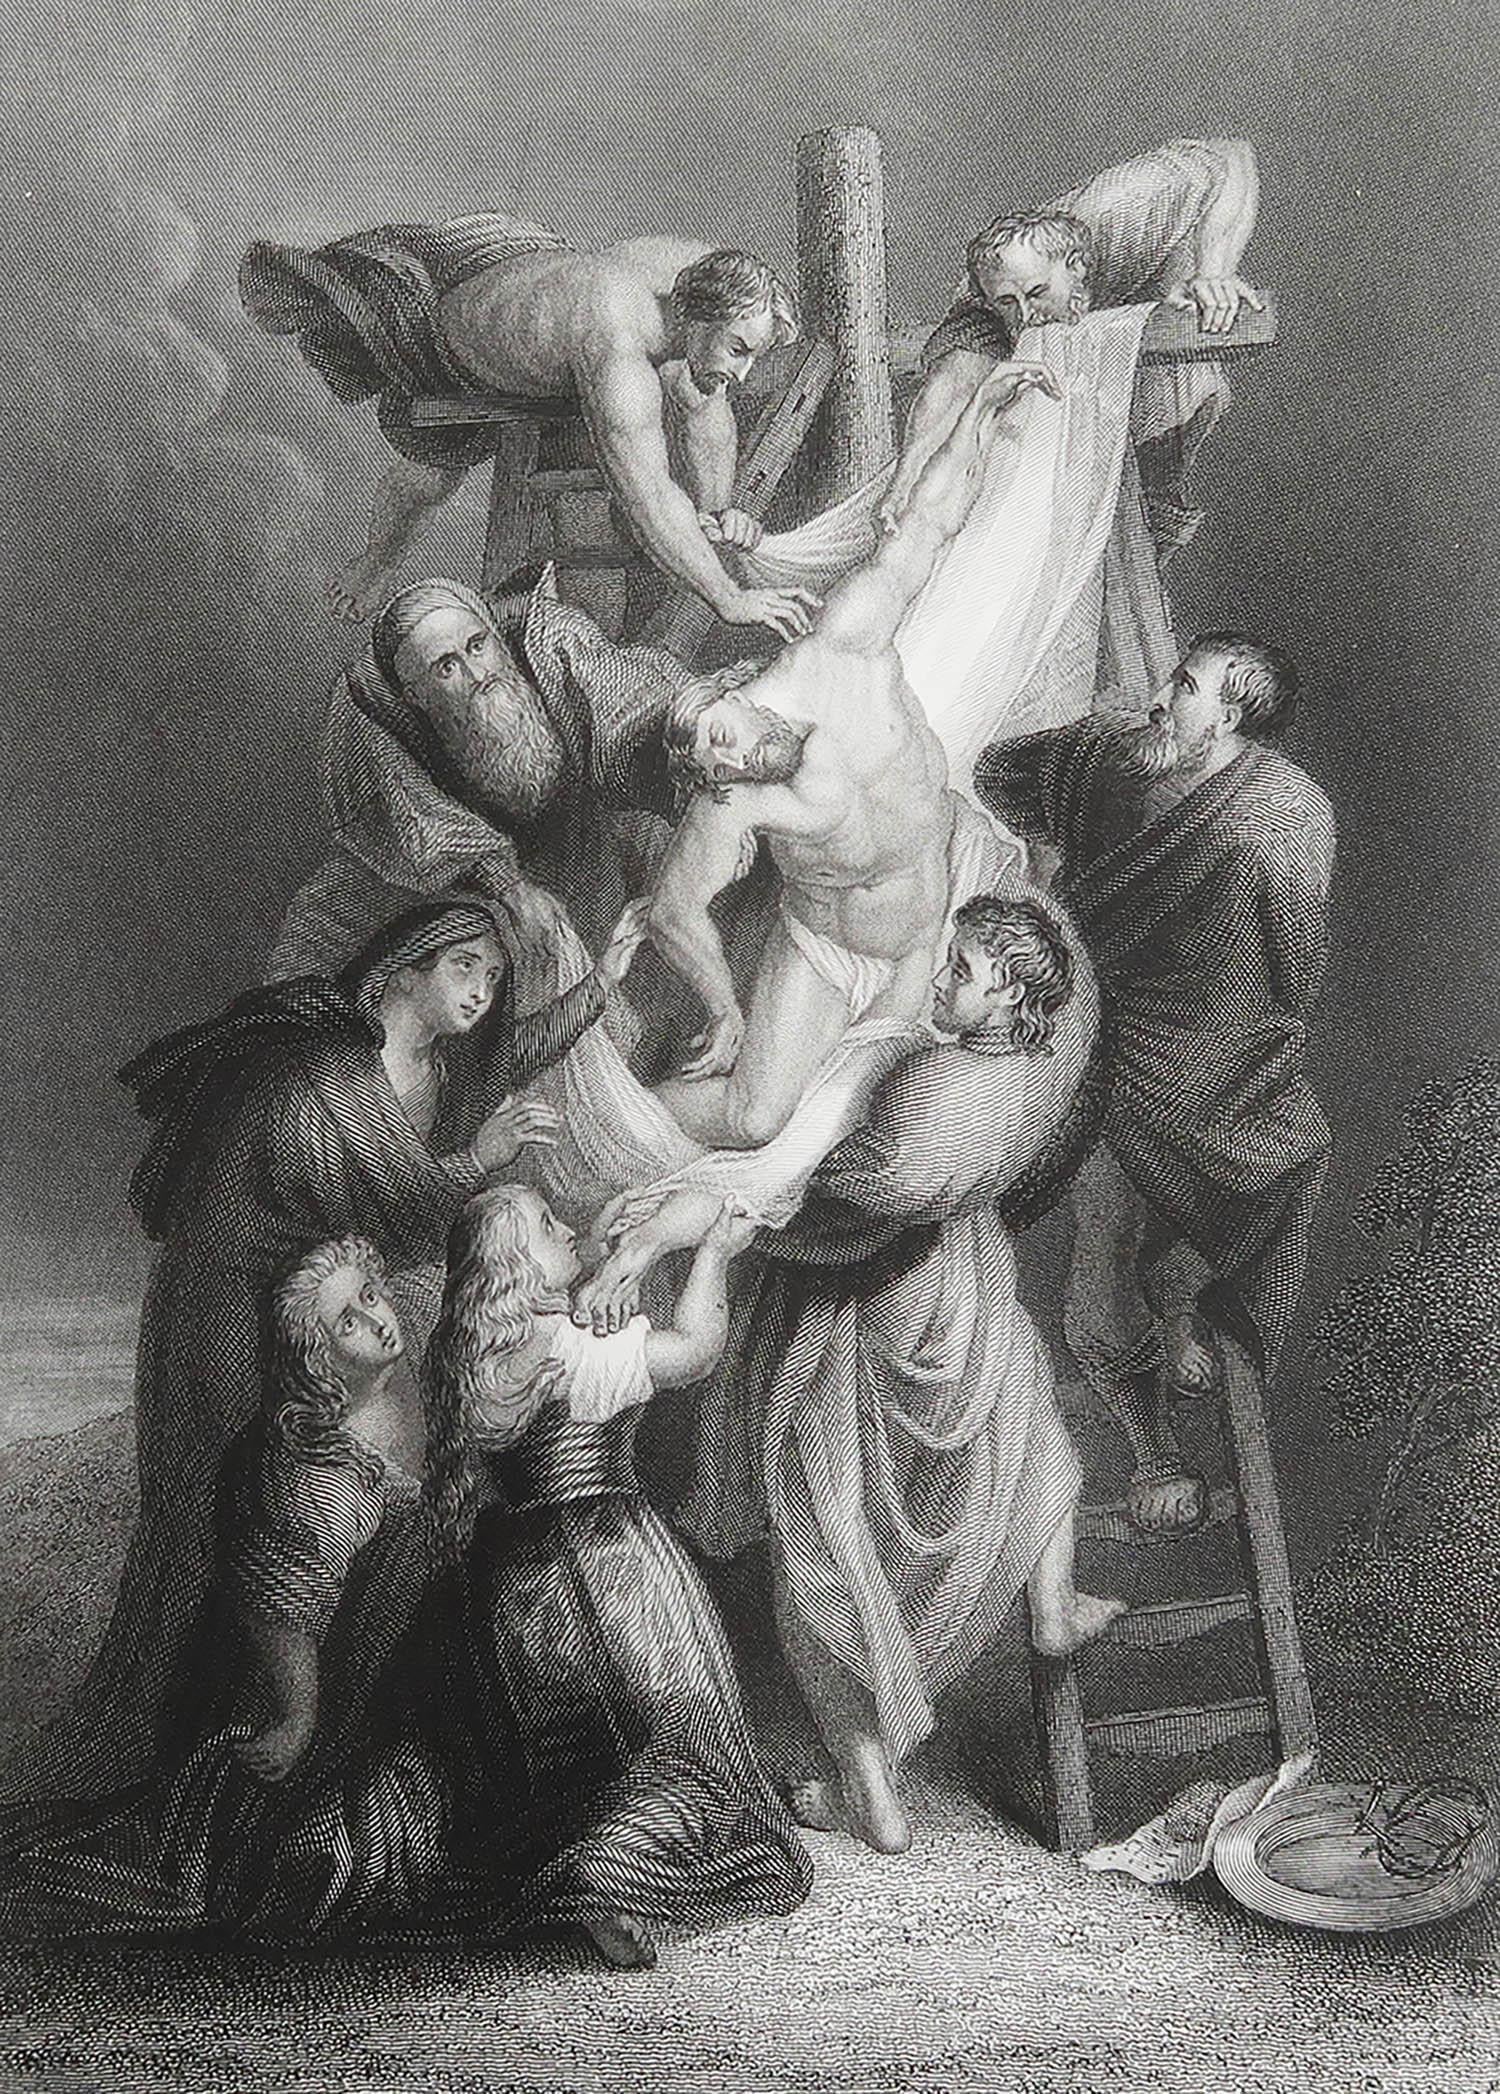 Wonderful image after Rubens

Fine steel engraving. 

Published by Sangster, C.1850

Unframed.

